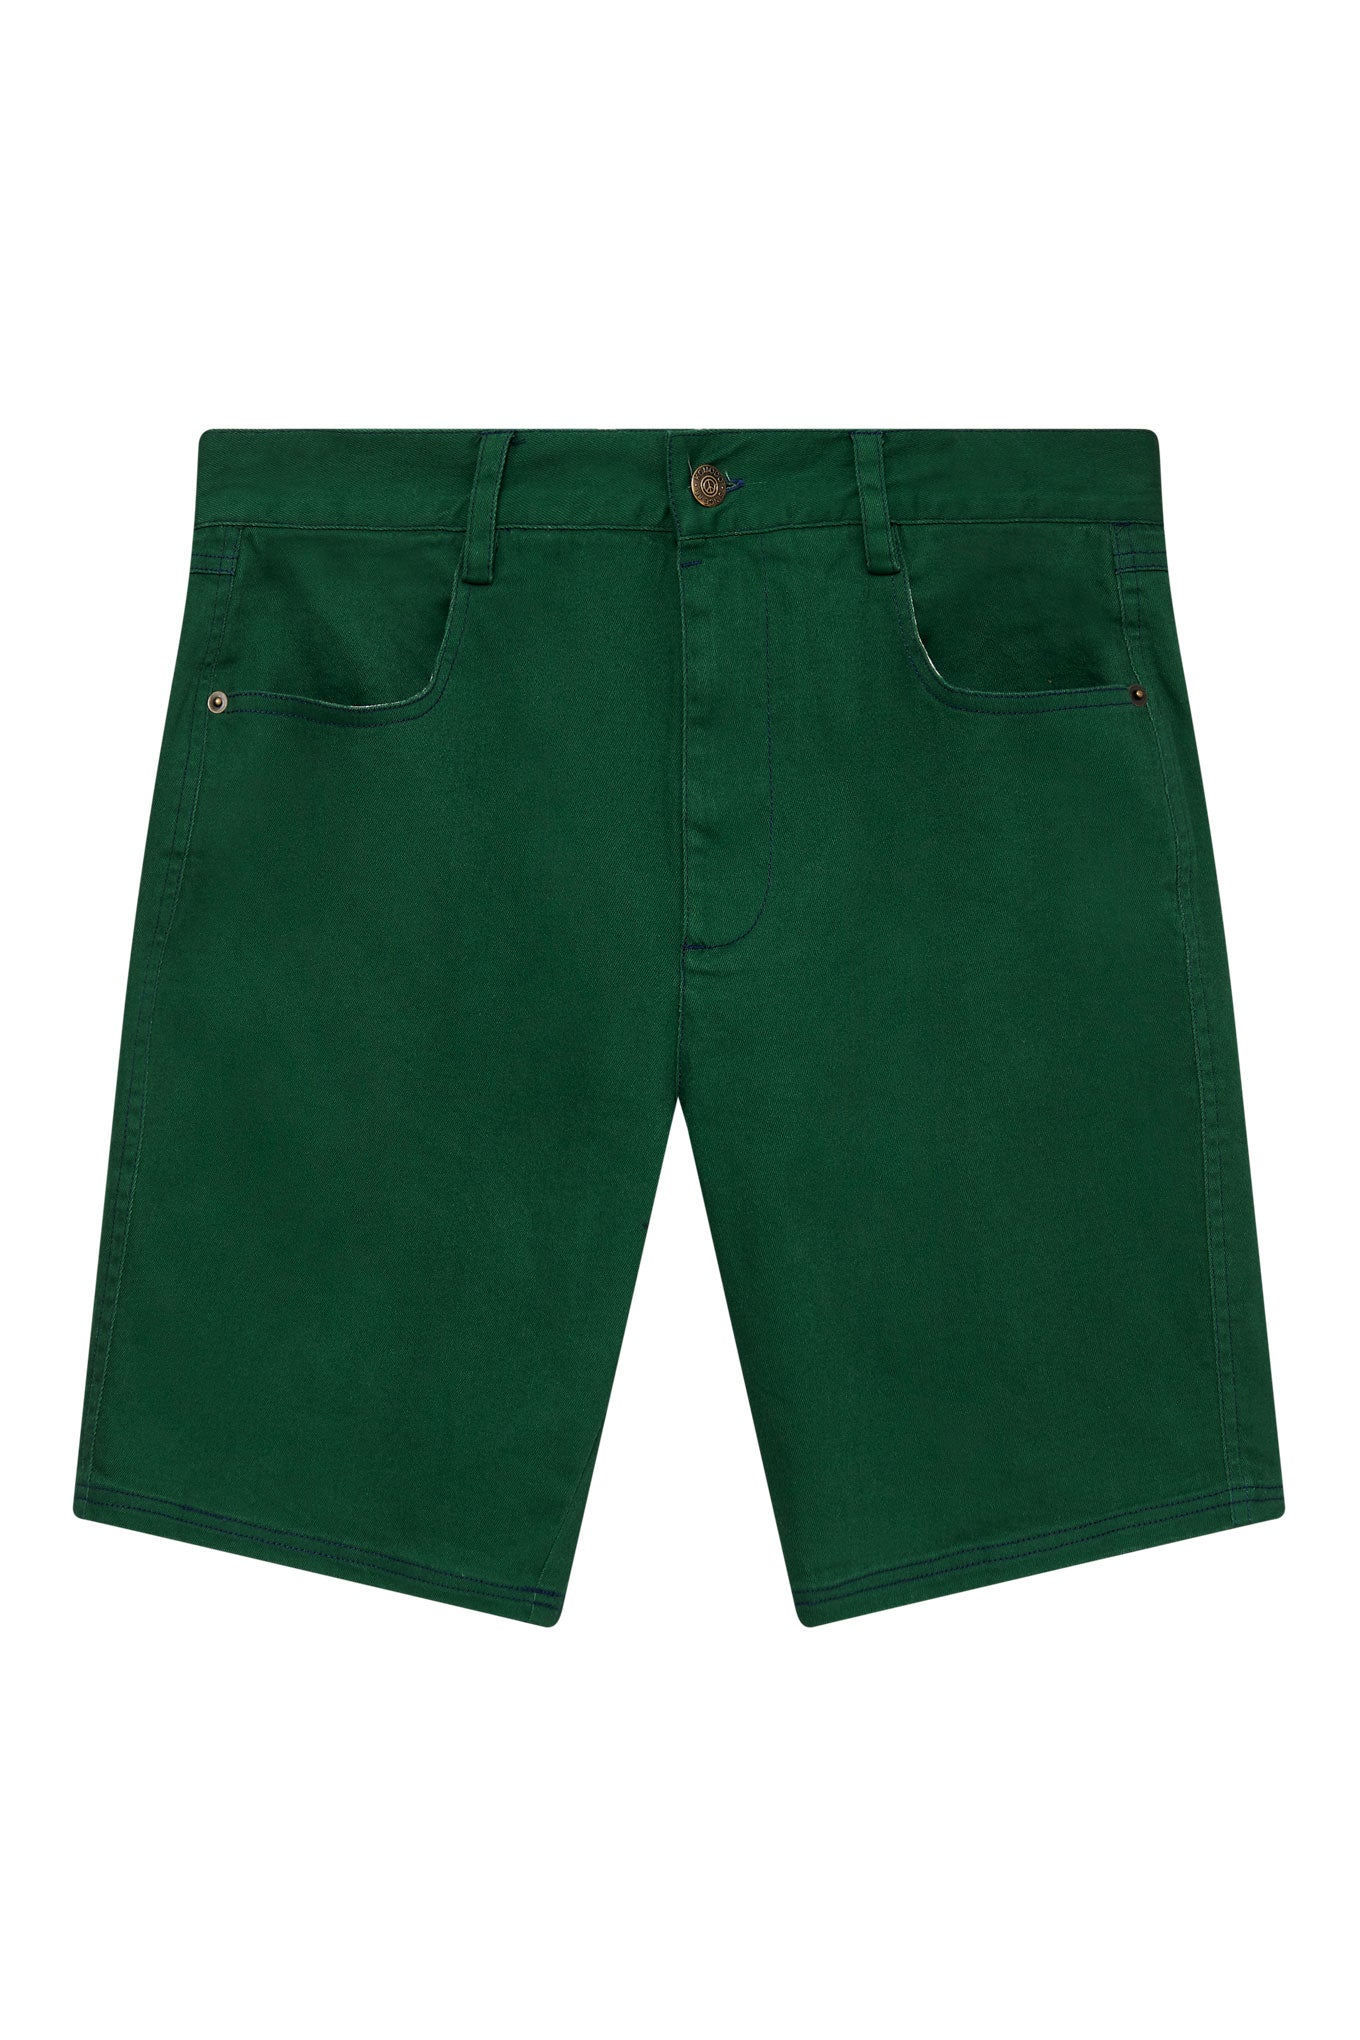 Komodo Men's Lyric - Organic Cotton Shorts Forest Green